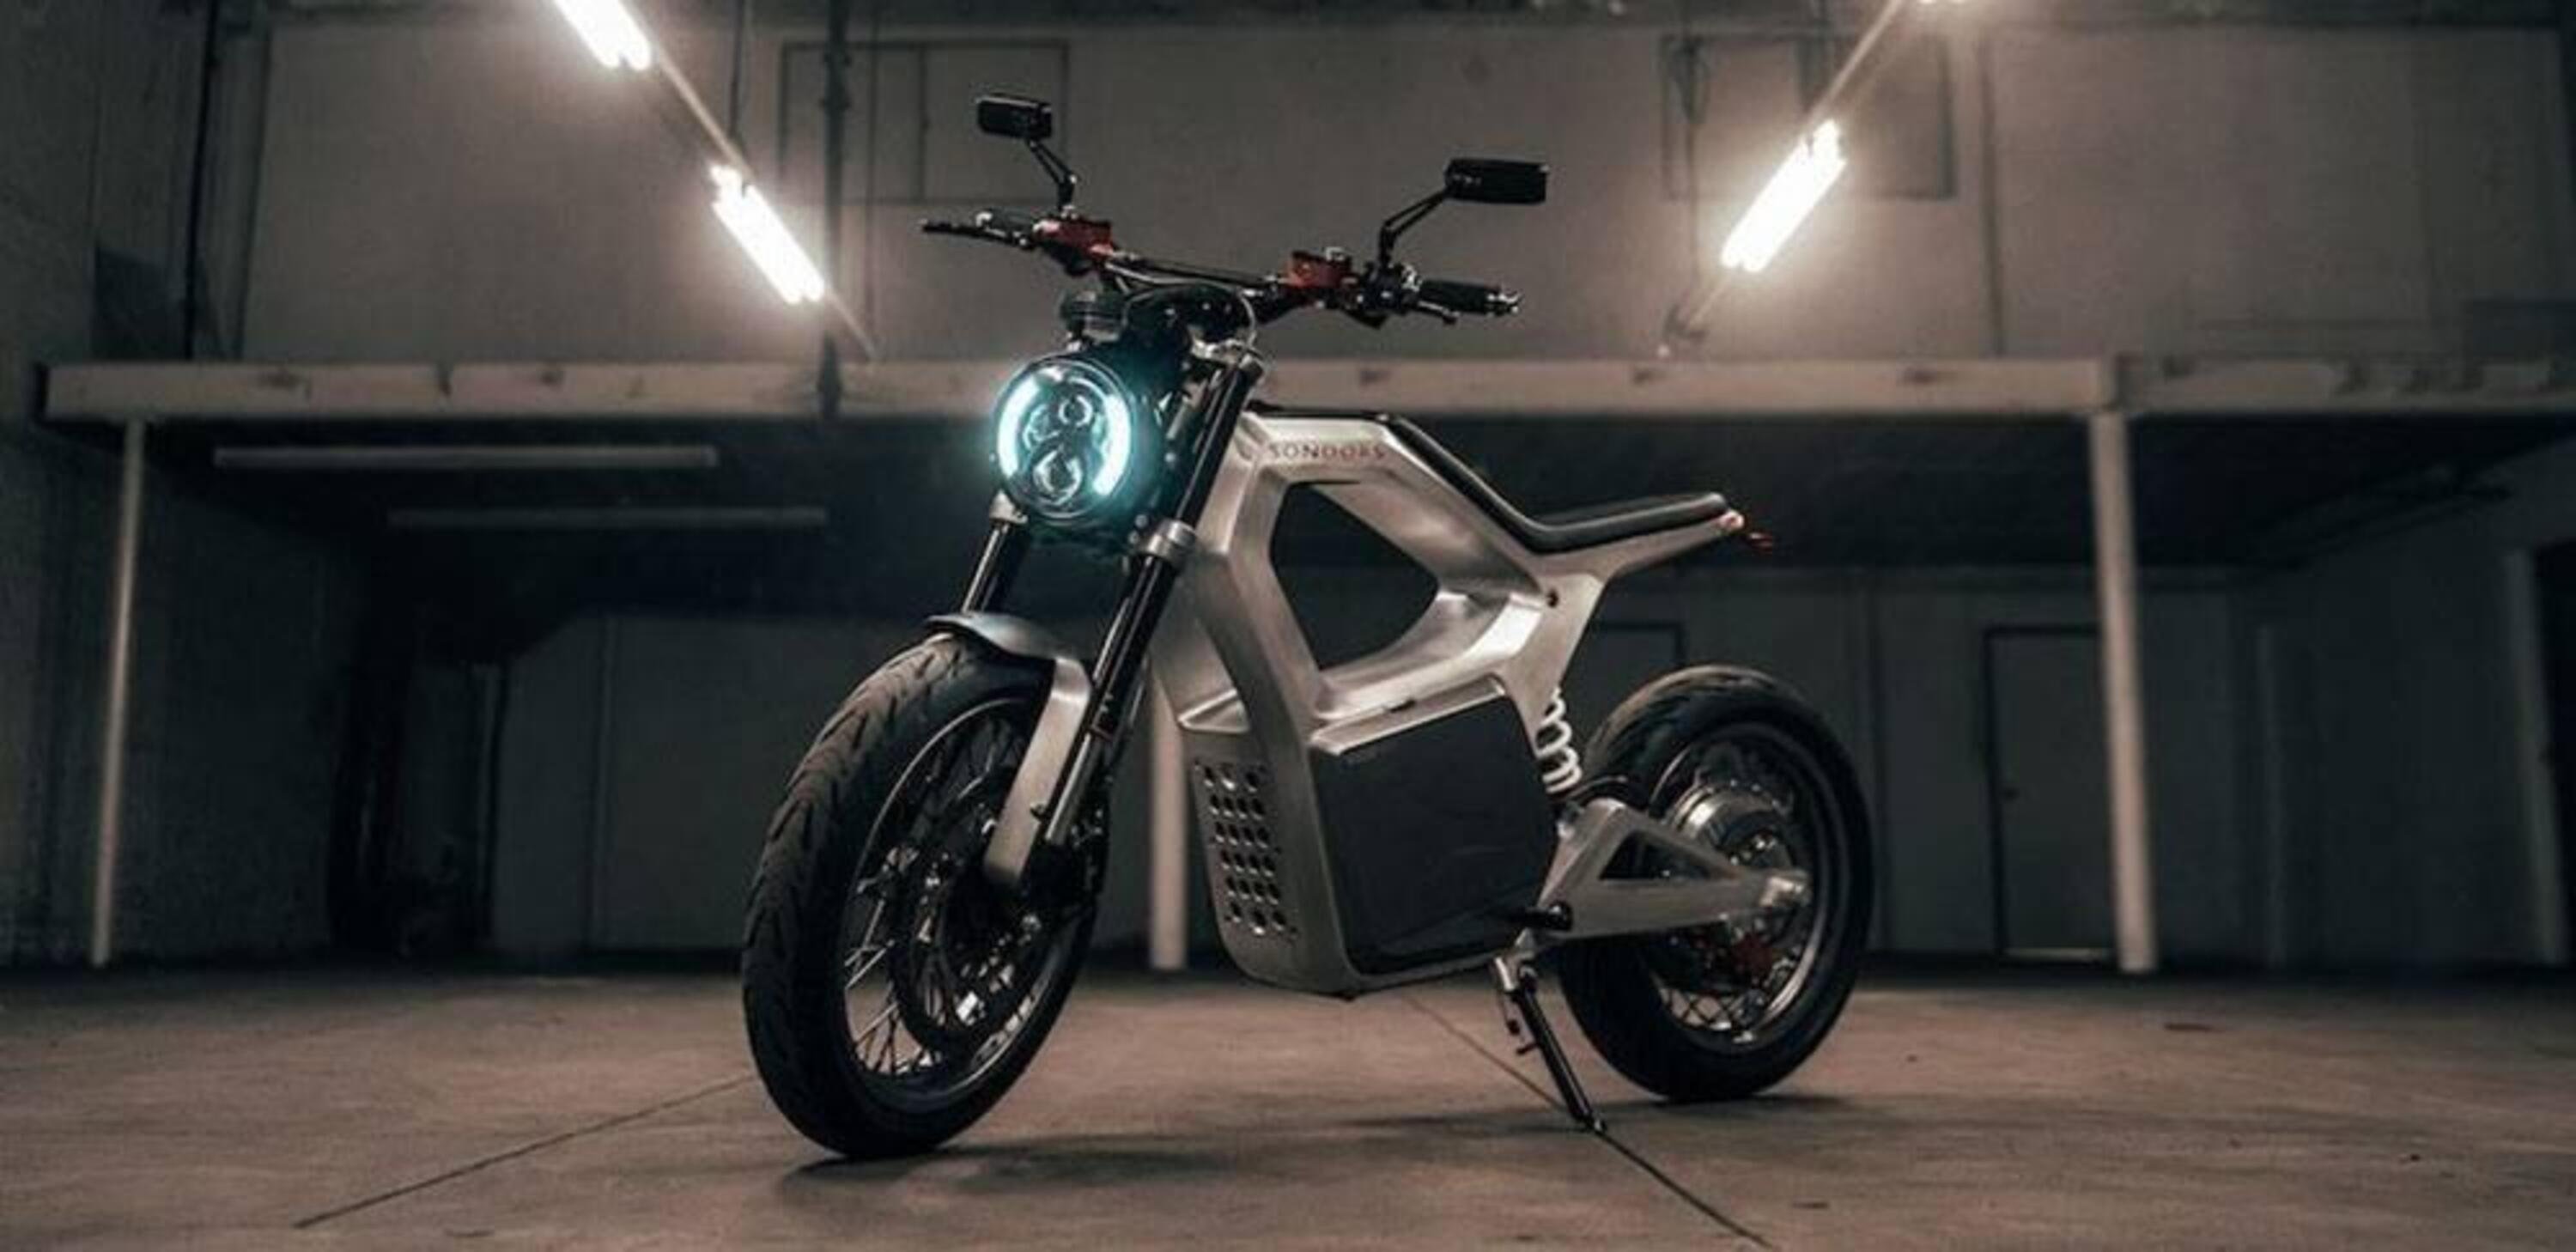 Metacycle&nbsp;Sondors, la moto elettrica che vorrebbe essere una Tesla